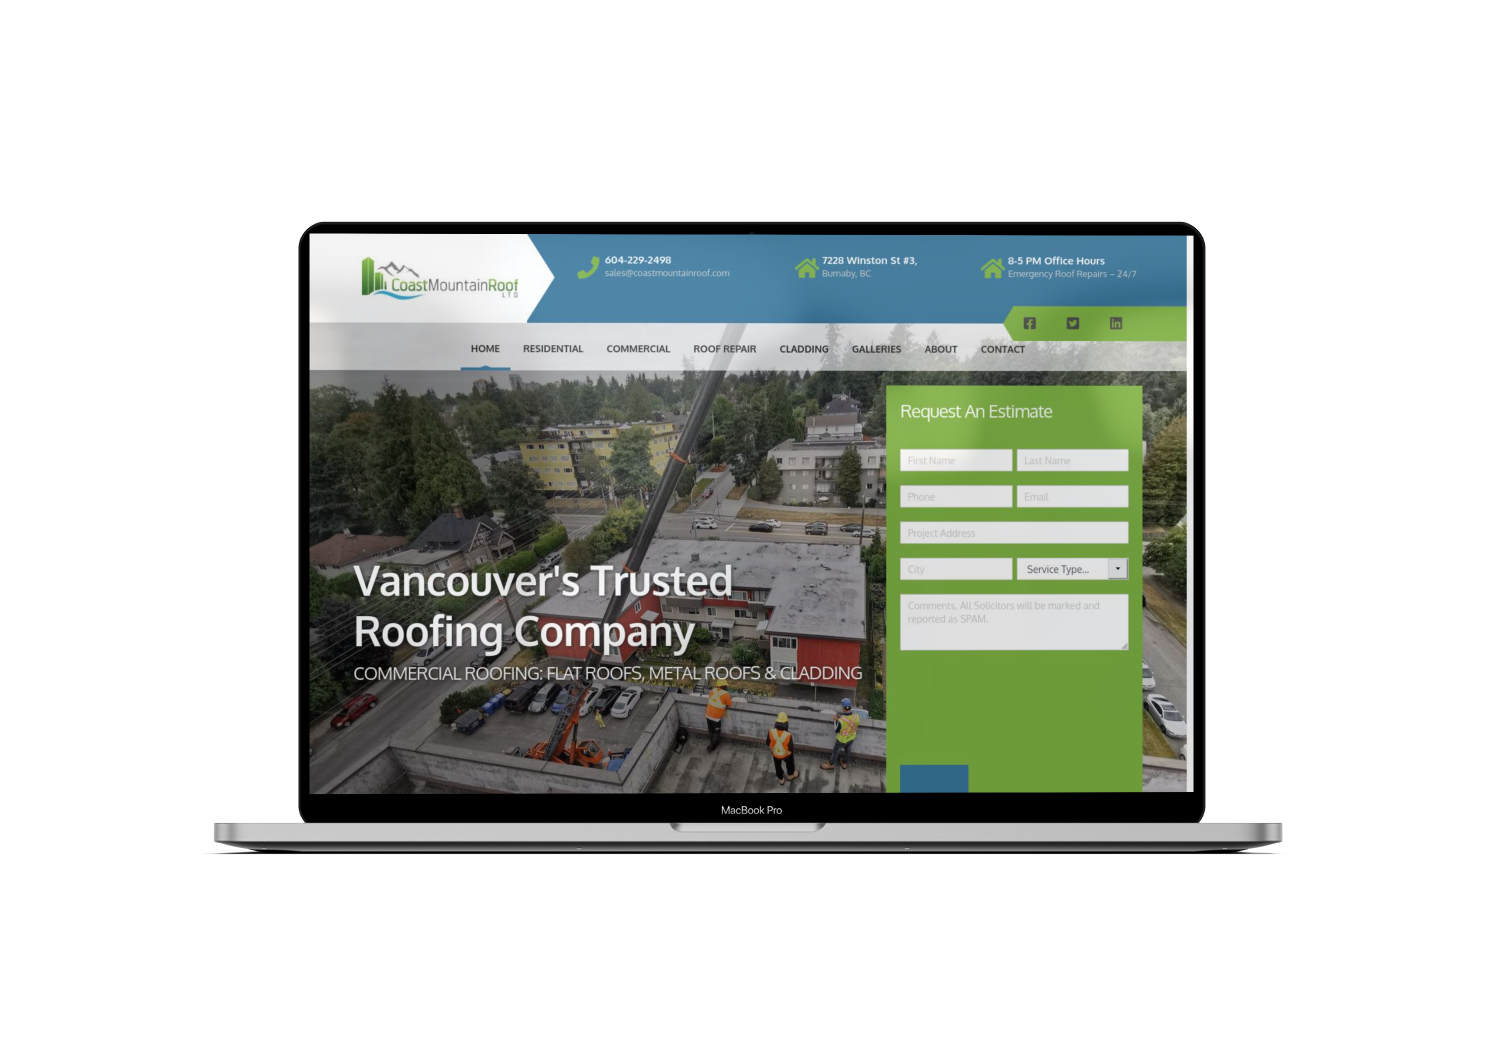 Mockup Mac Website Design for Roofing Company